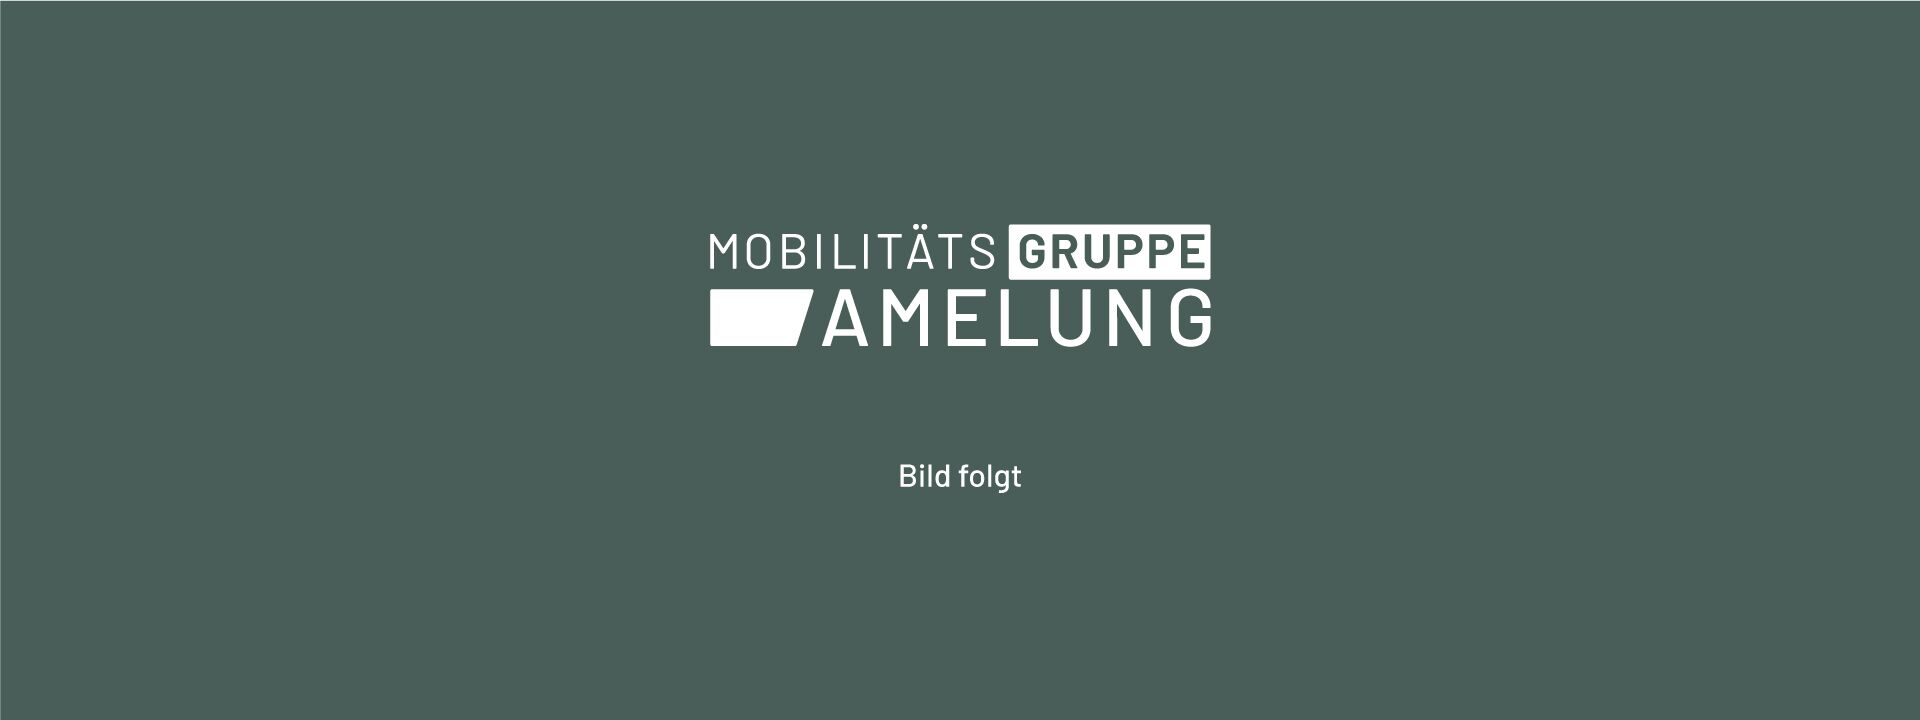 Instandsetzung ANDAMO Holding GmbH & Co. KG